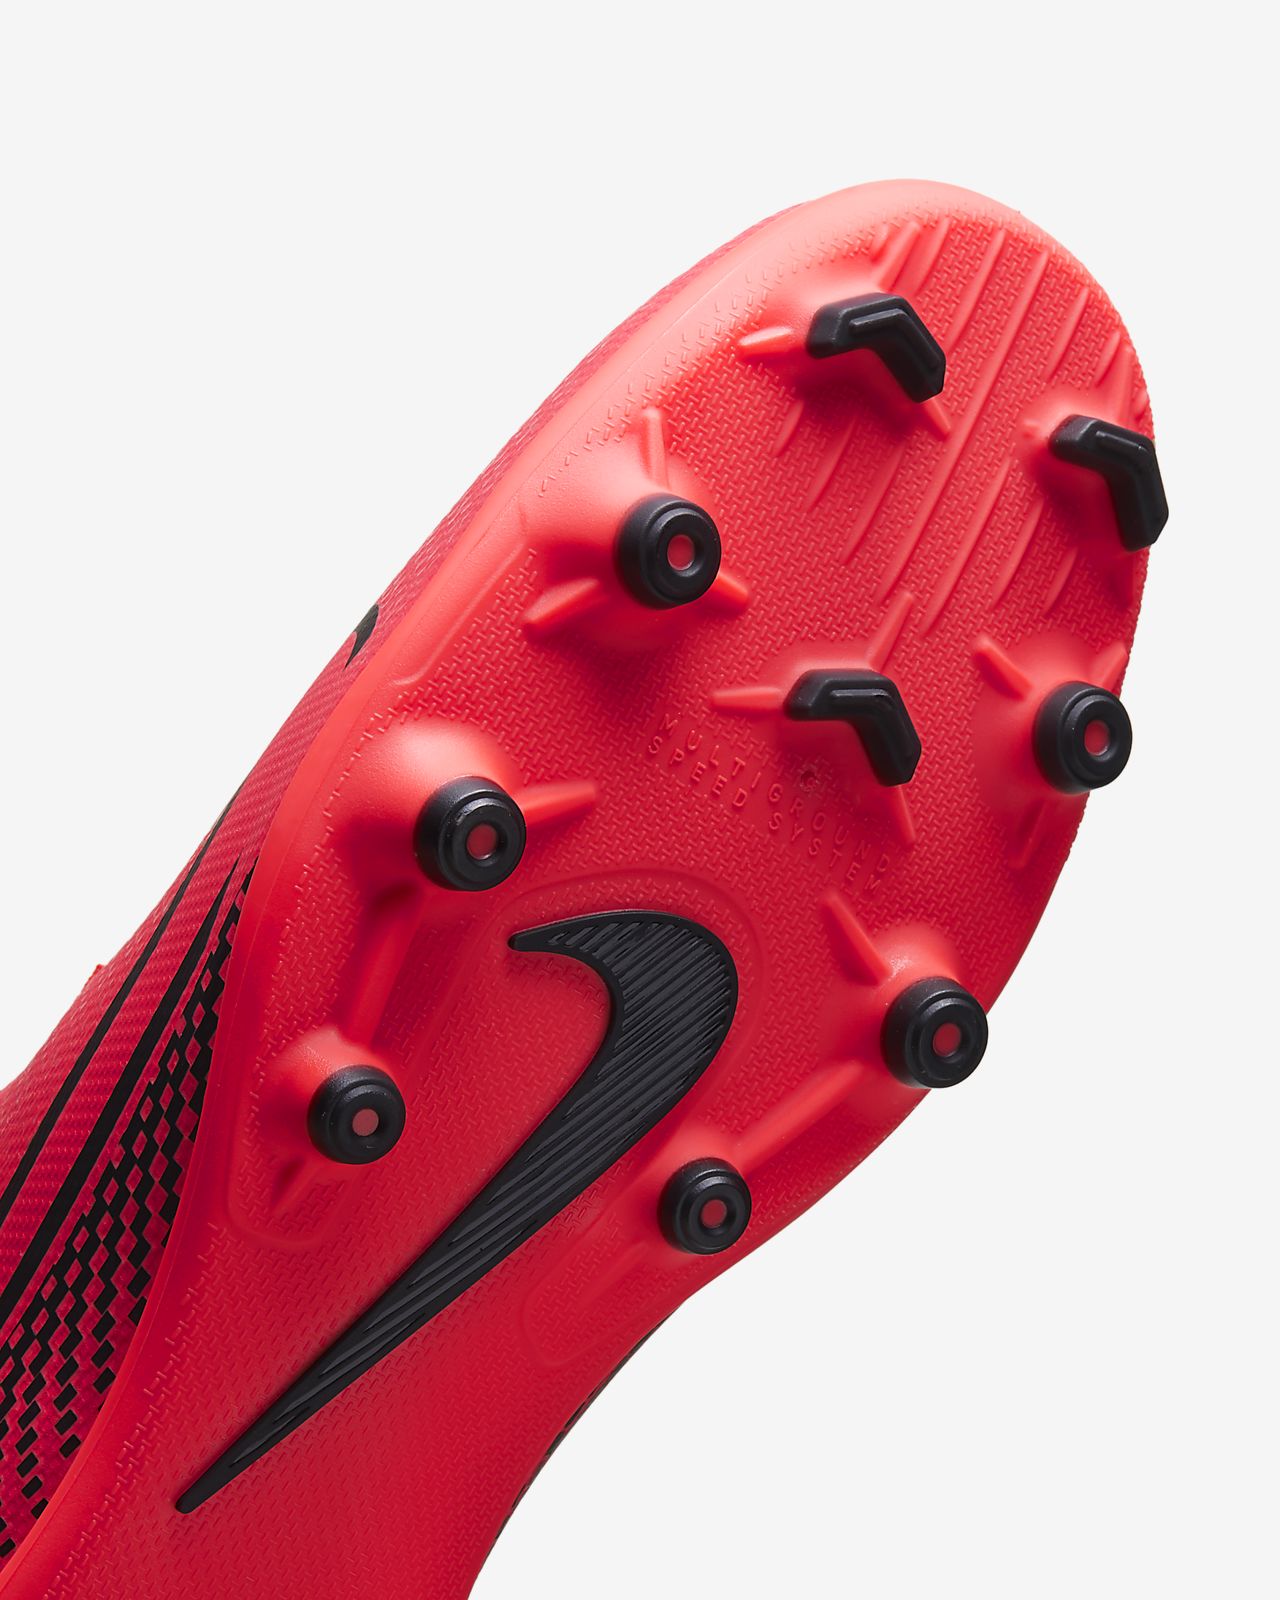 Nike Mercurial Vapor 13 Pro Mds Tf Artificial Turf Football Boot.